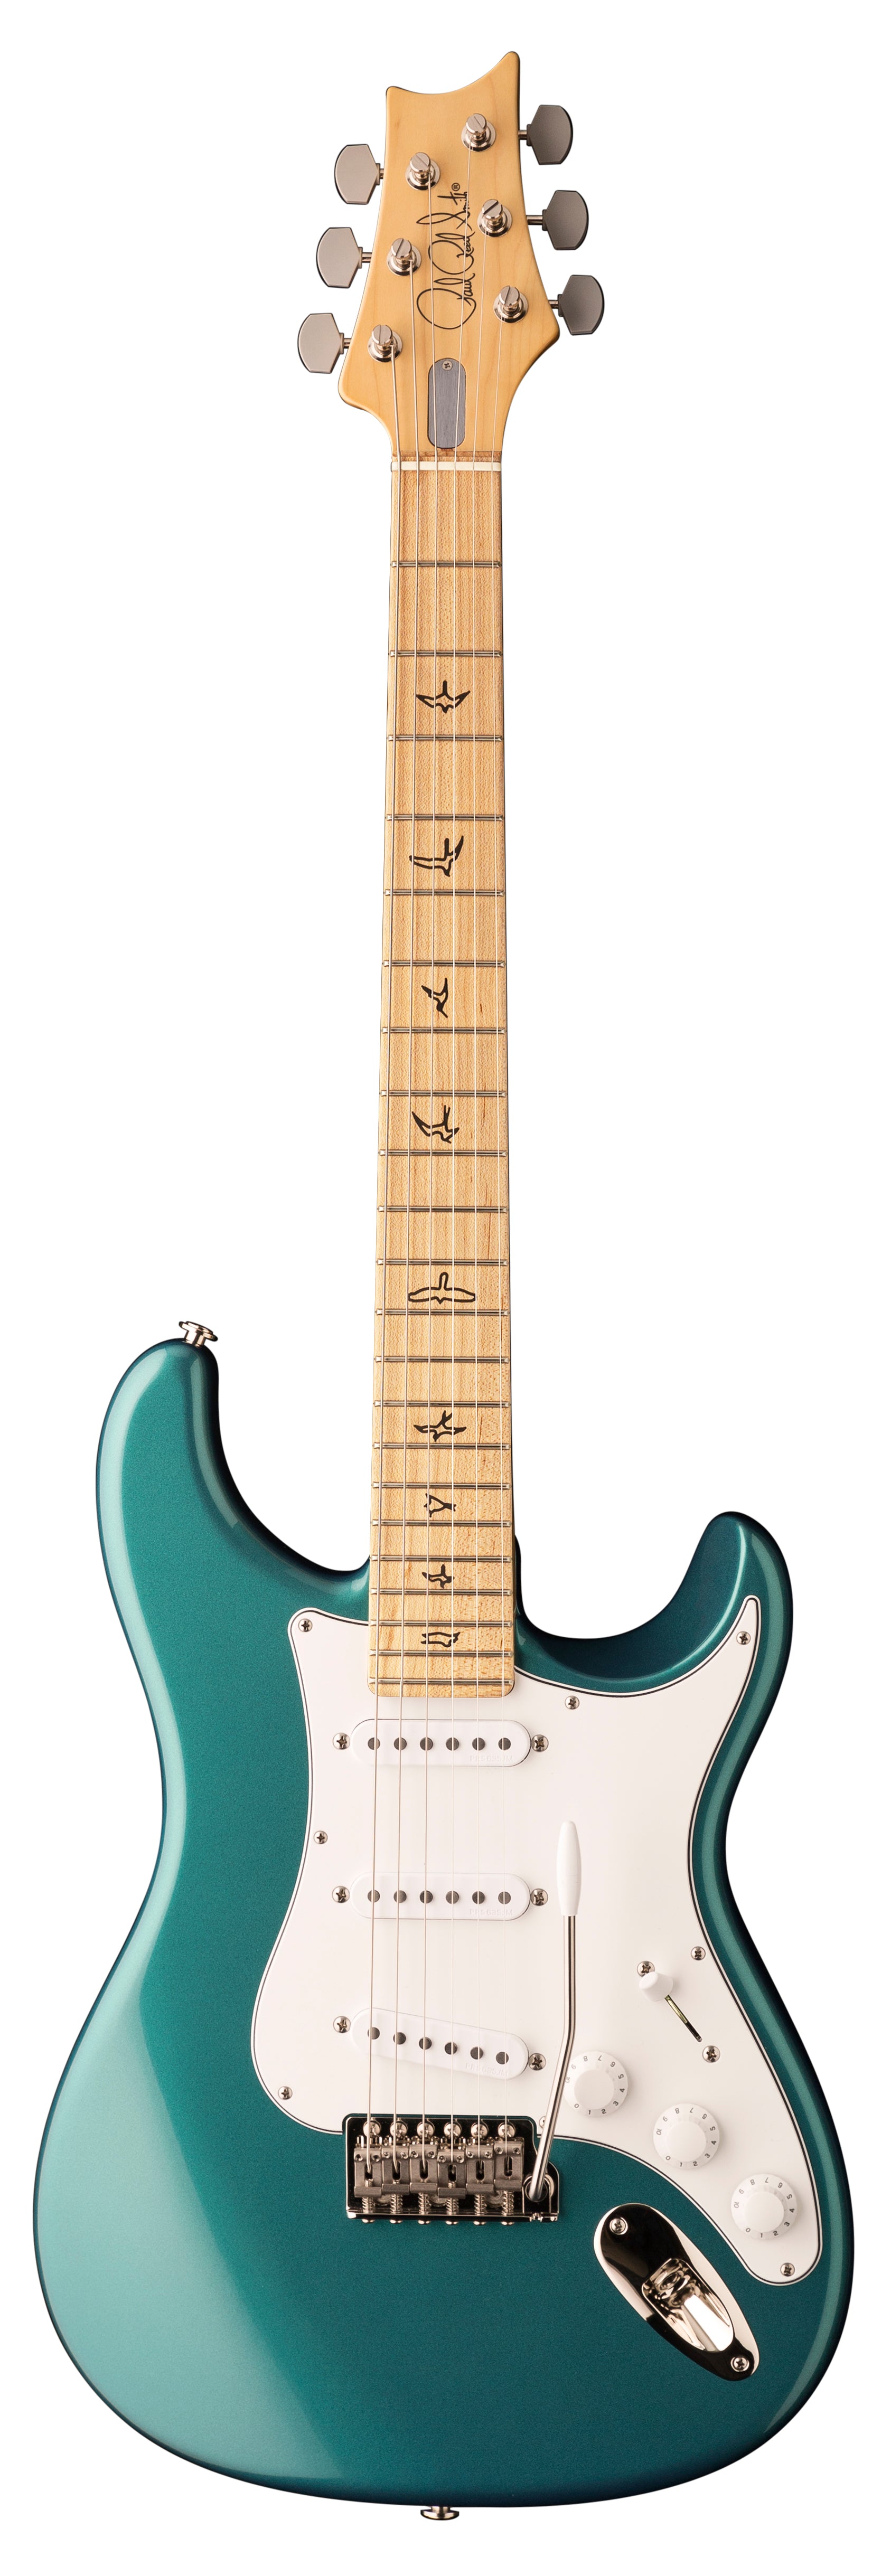 PRS Bolt-On Signature Silver Sky Series Electric Guitar - Maple Fretboard (Dodgem Blue)